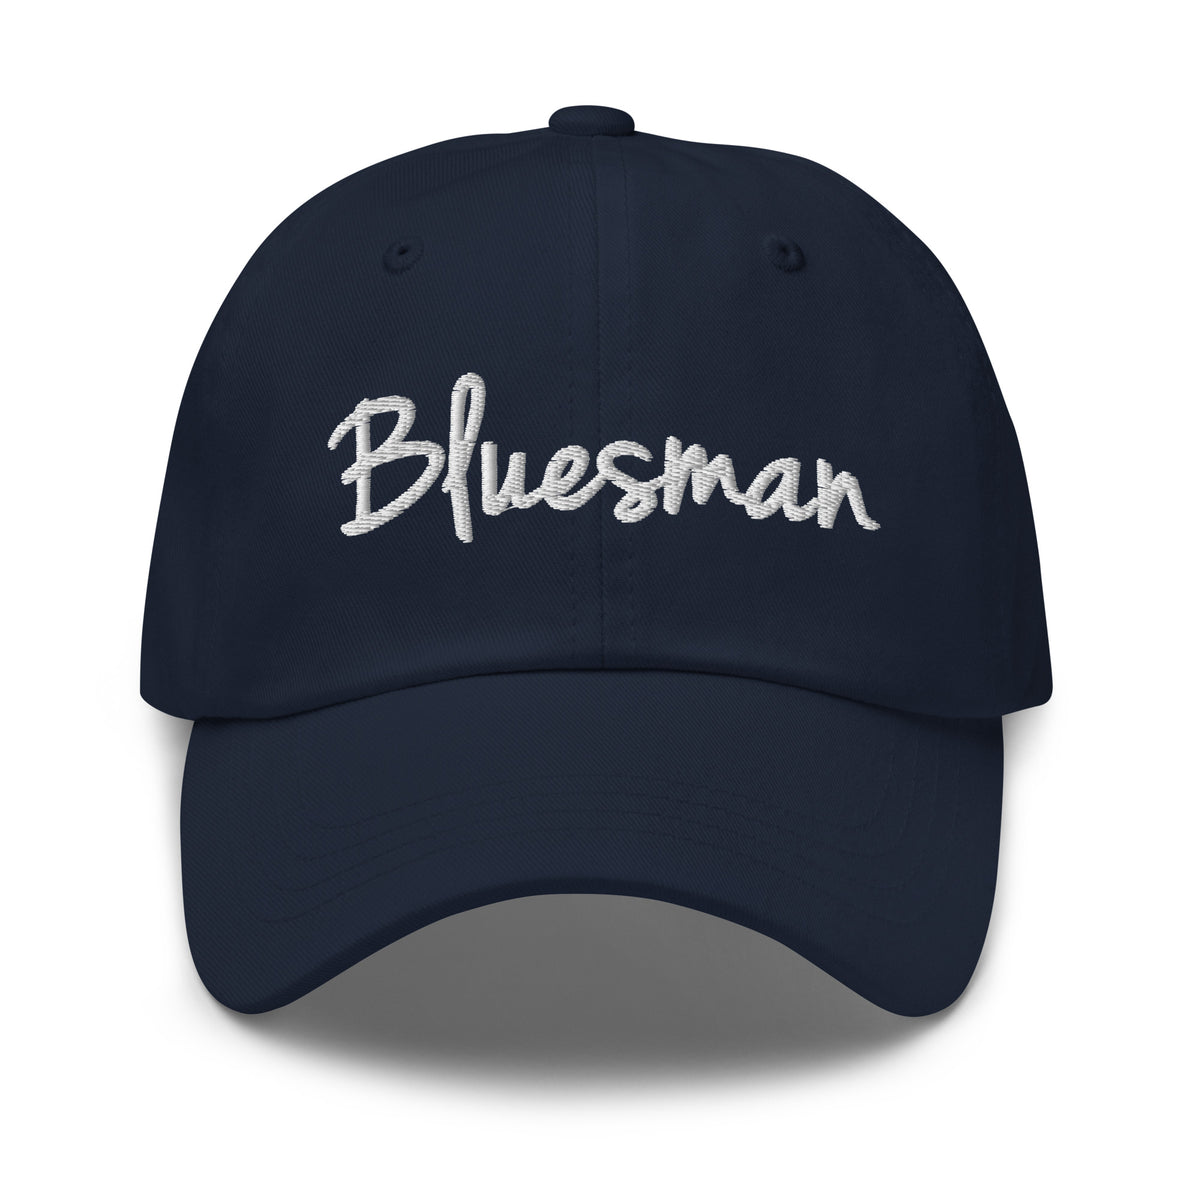 Bluesman Dad hat